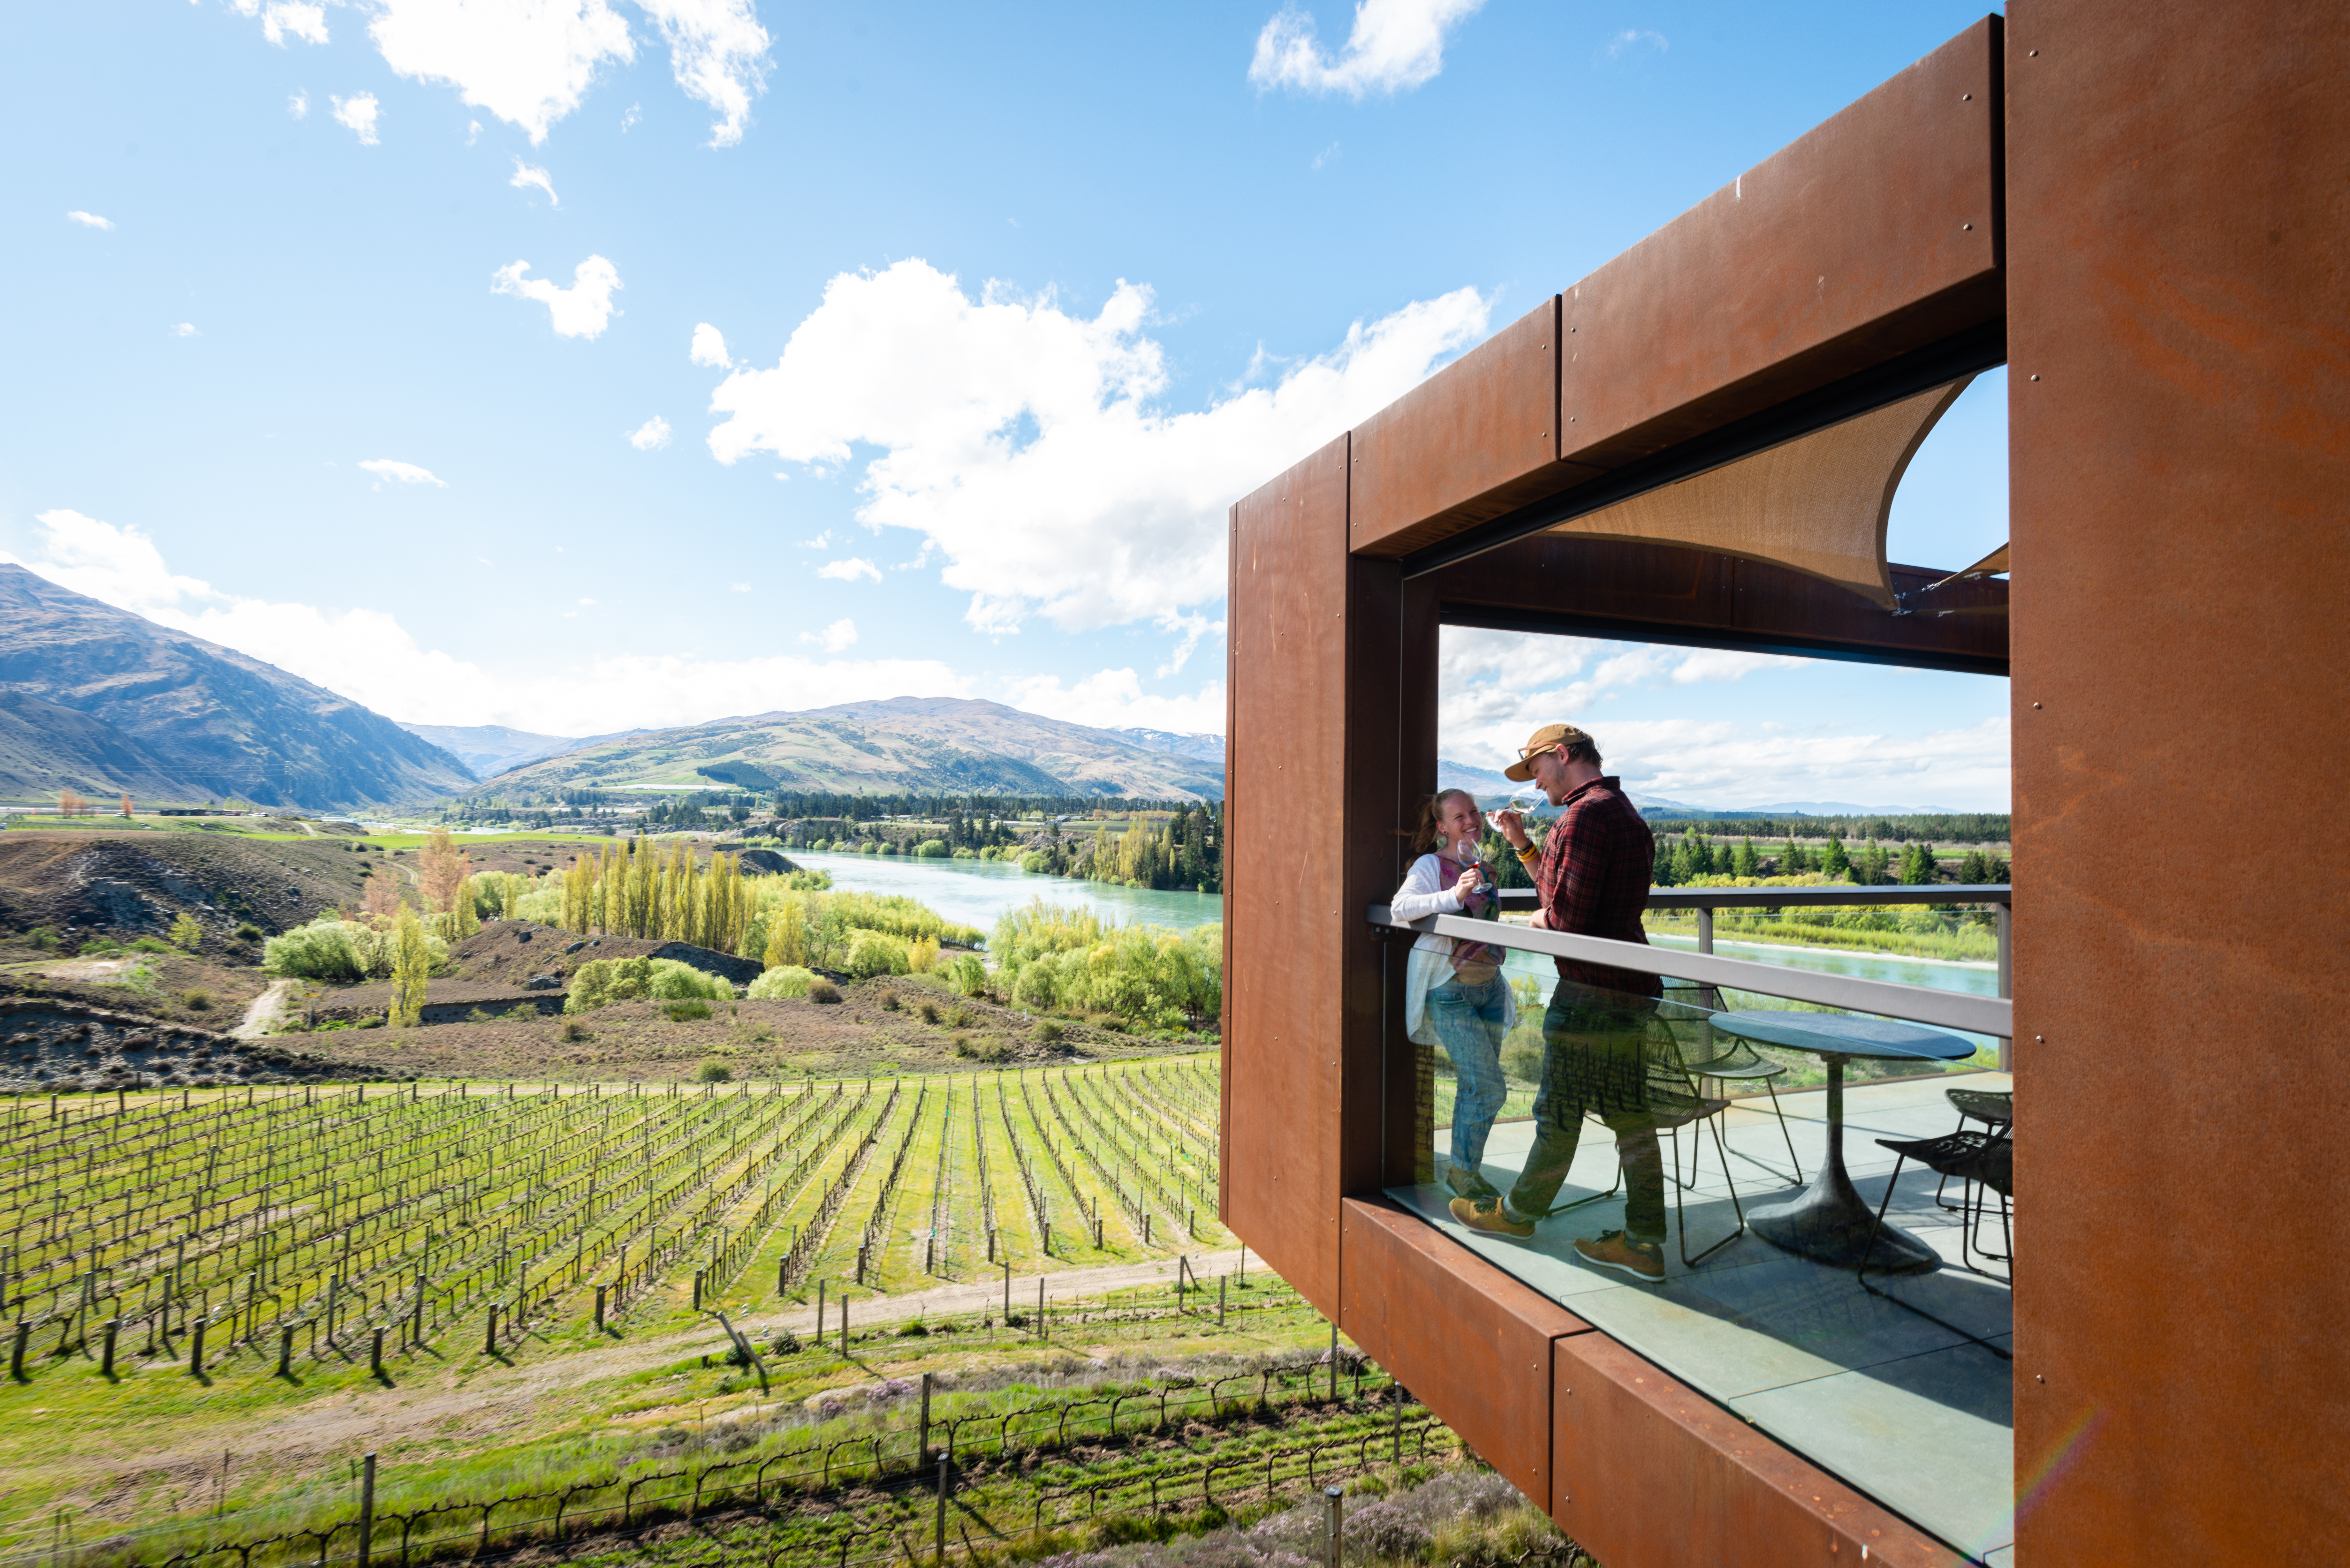 Te Kano Cellar Door, Bannockburn is one of the vineyards featured in Eat.Taste.Central 2022.